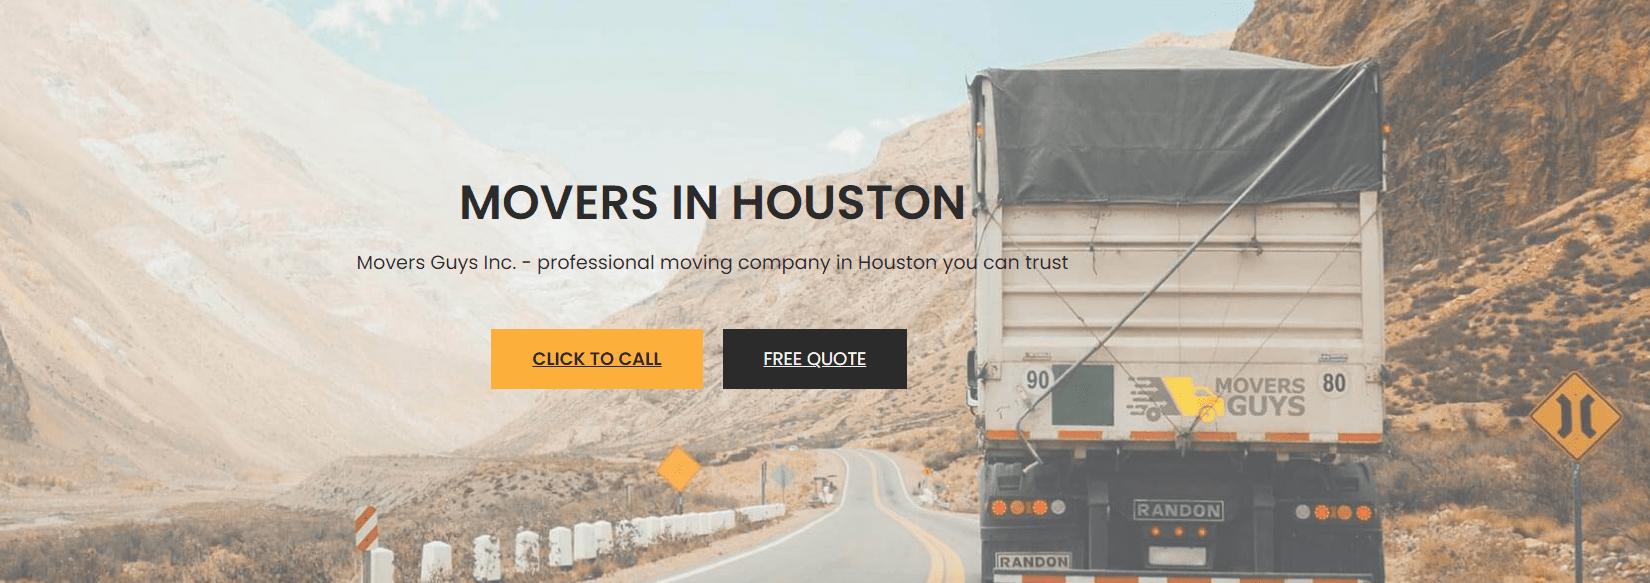 MoversGuys - Houston, TX, US, movers company houston